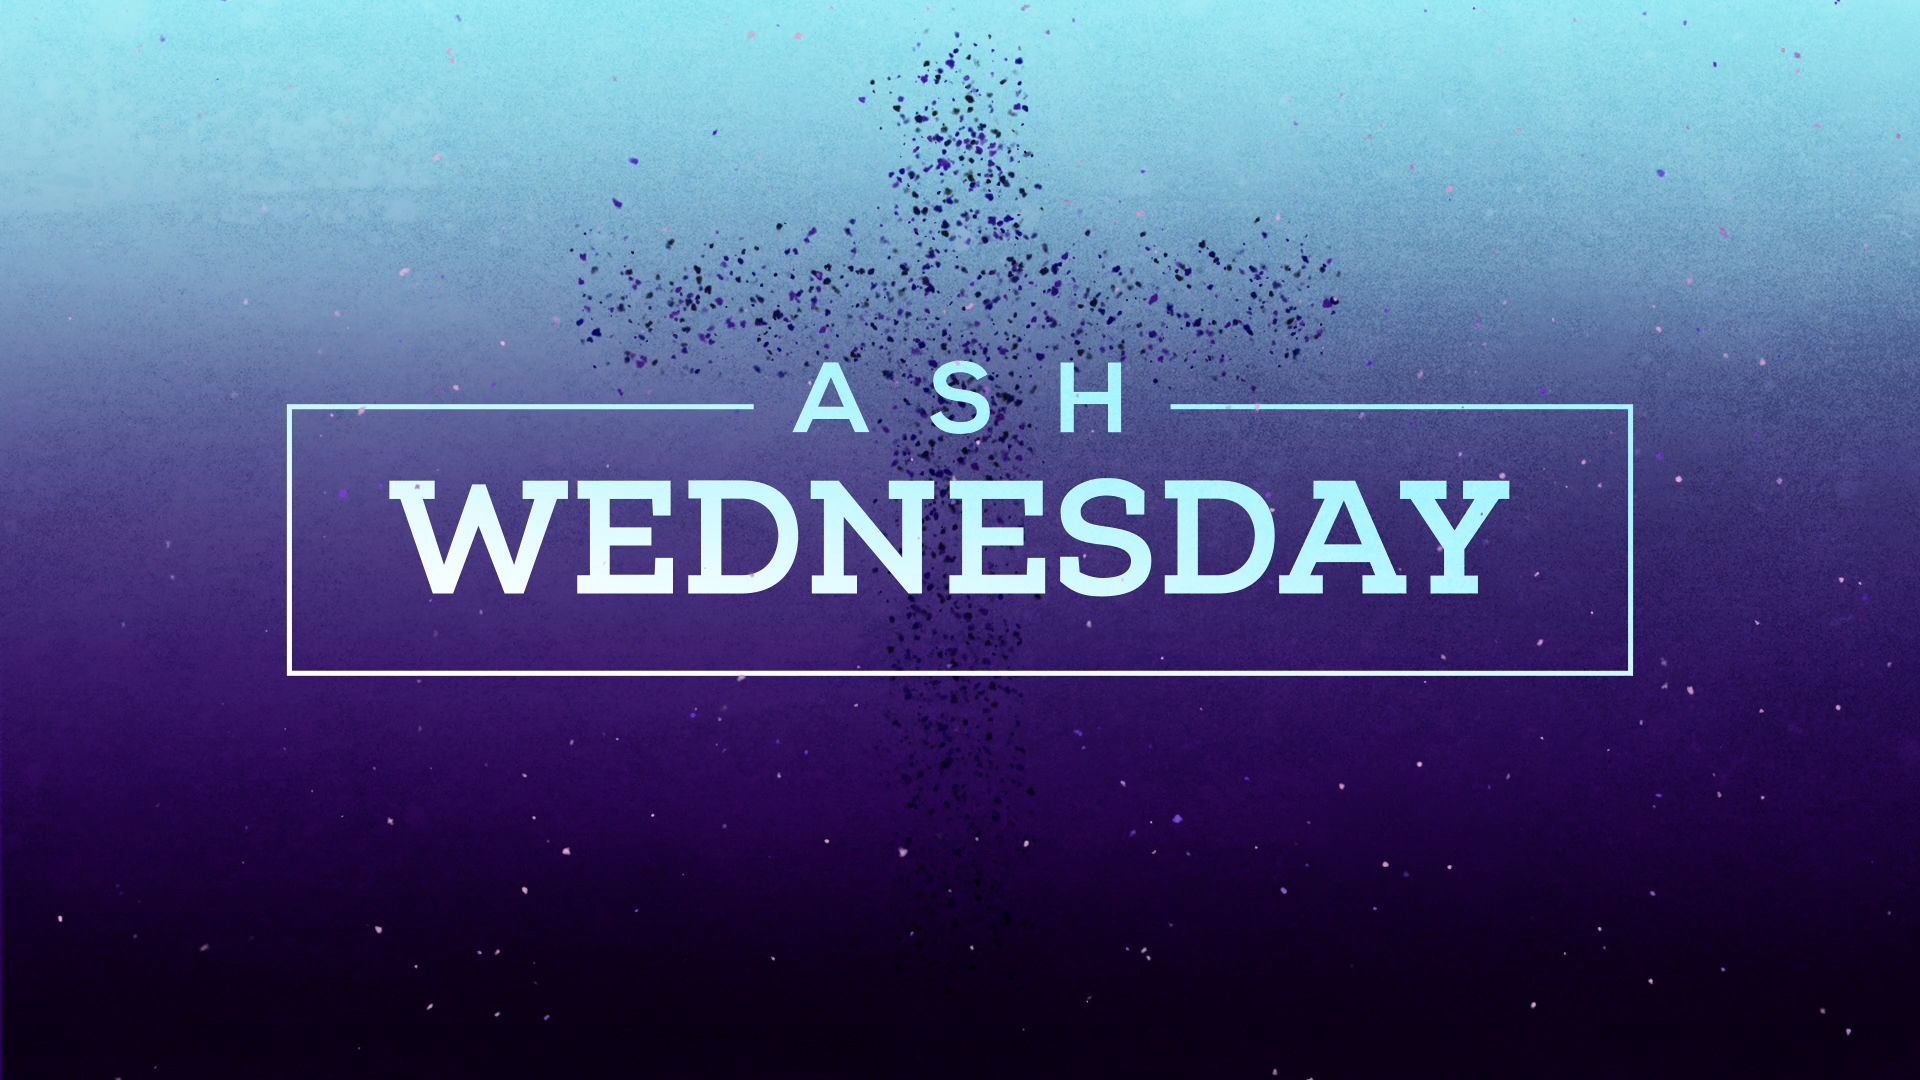 Ash Wednesday Wallpaper. Flash Wallpaper